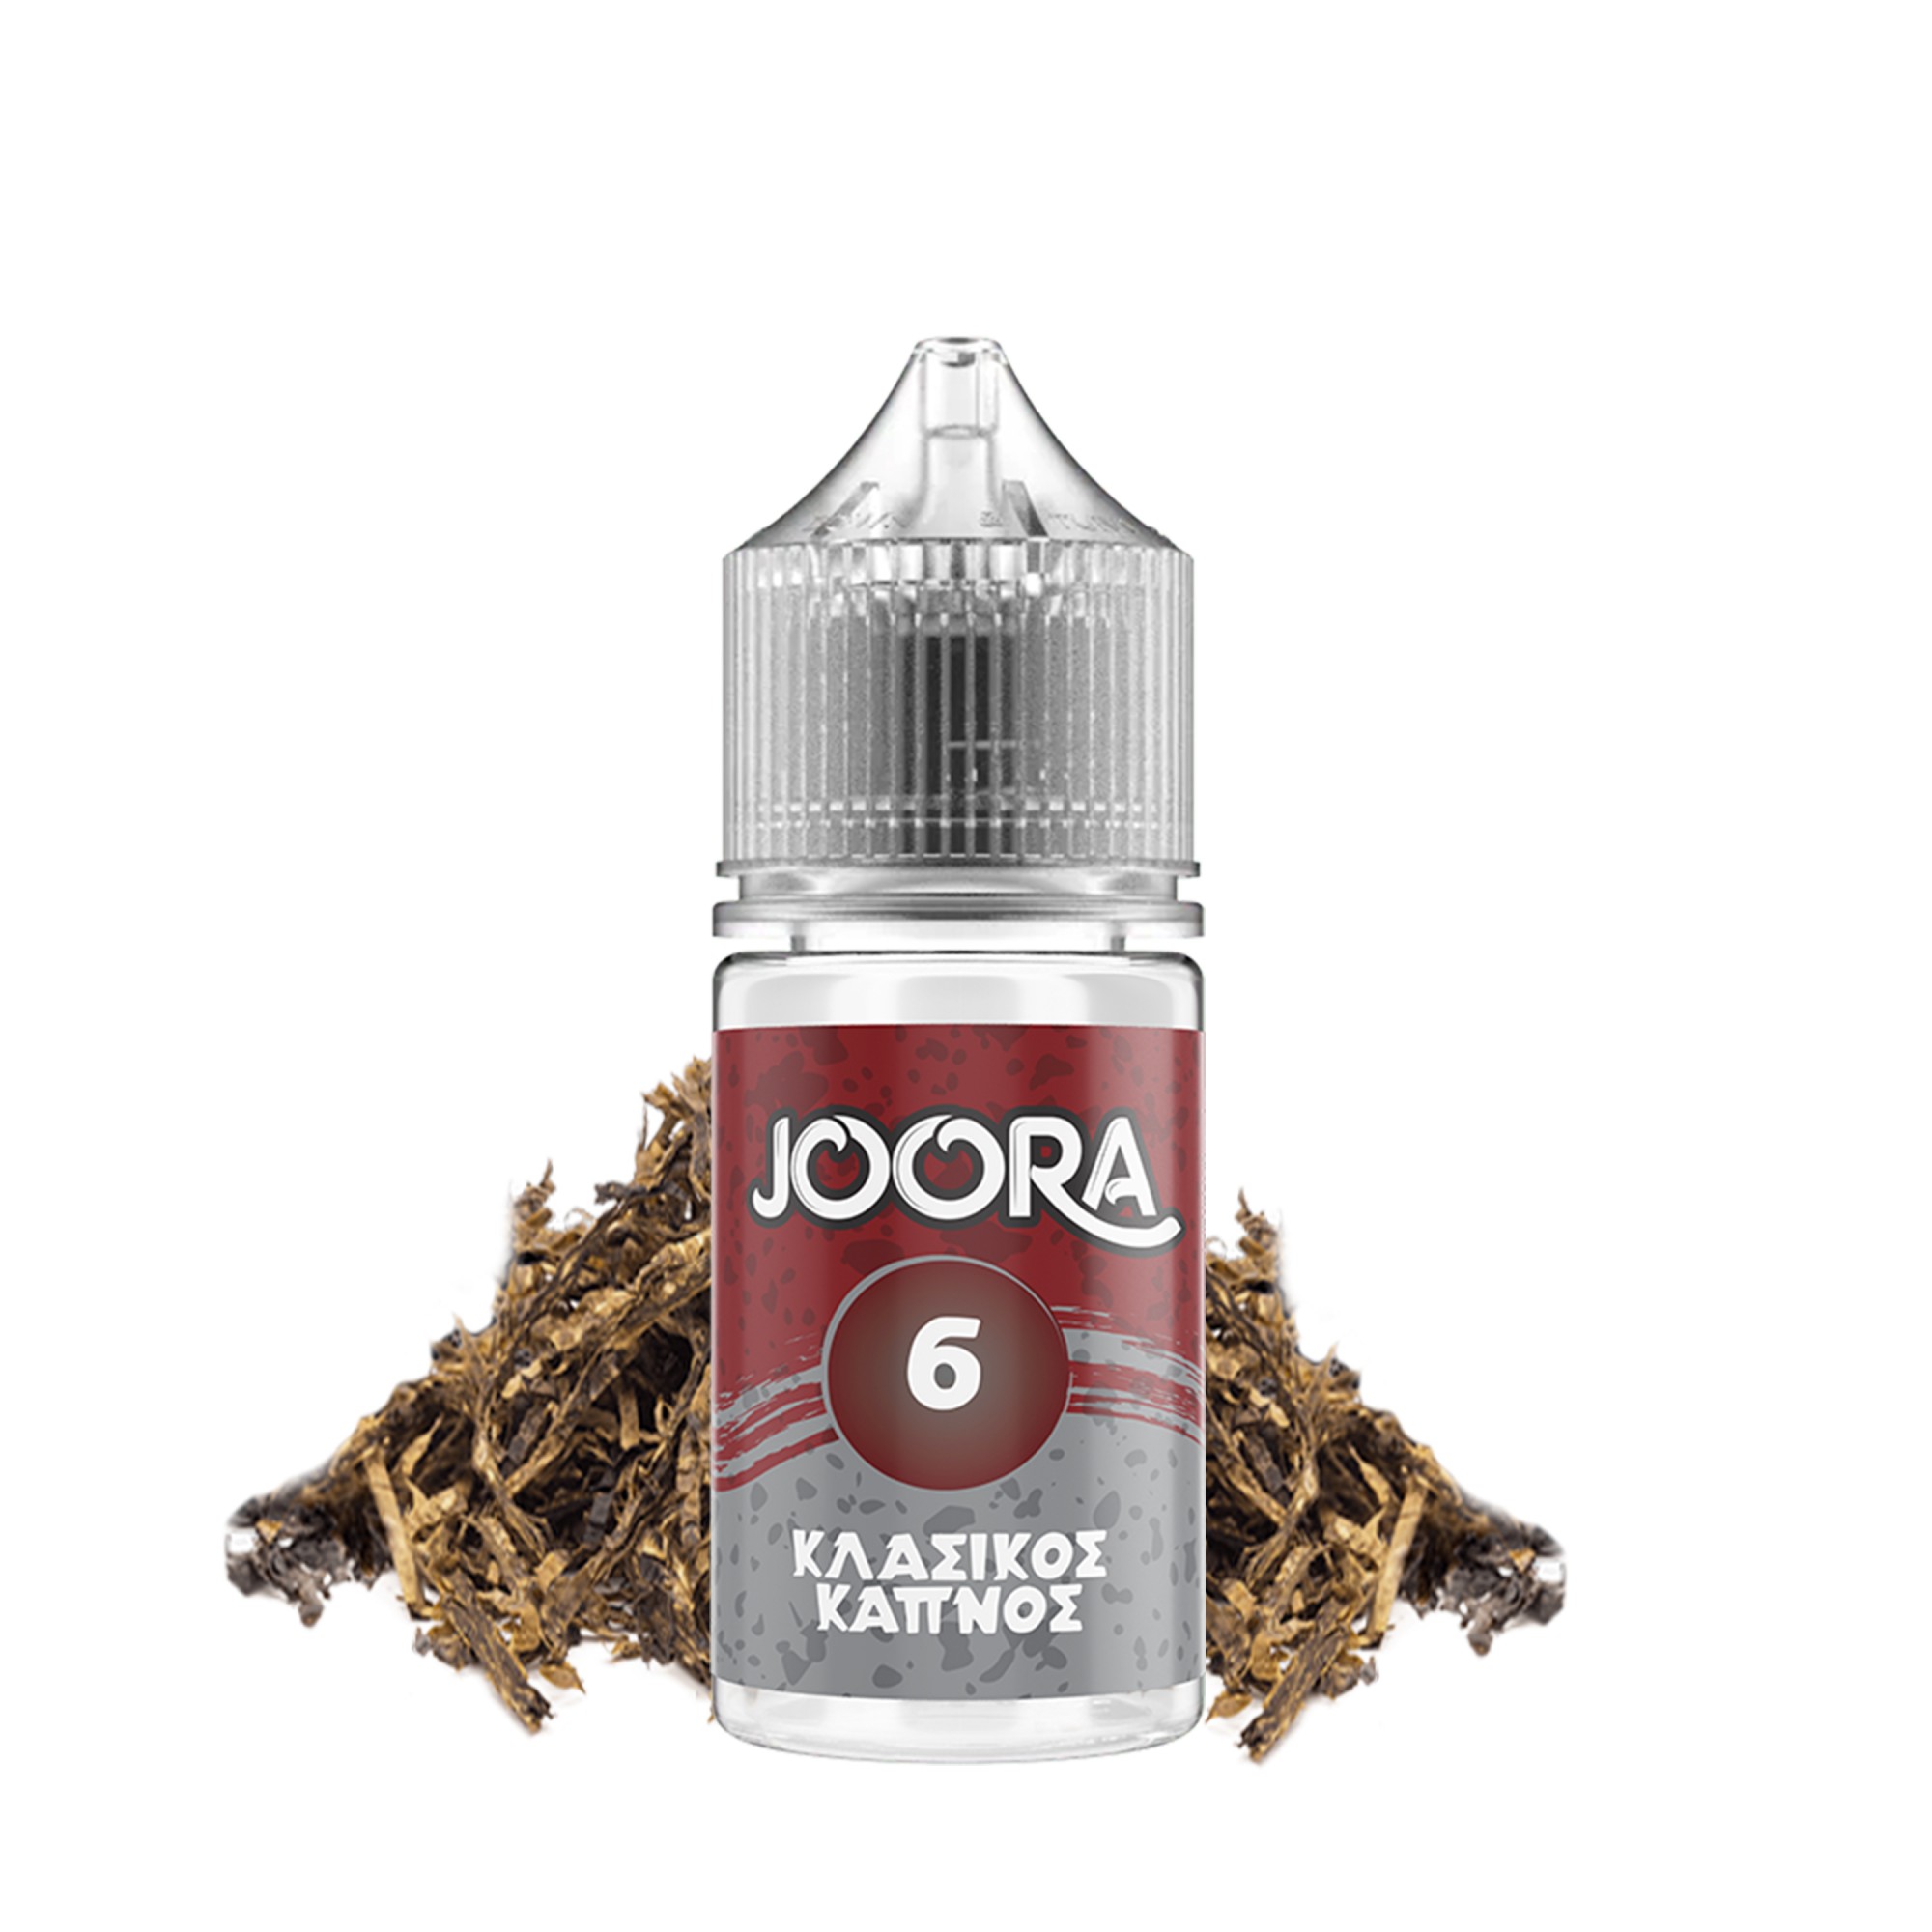 Joora 6 Κλασσικός Καπνός 30